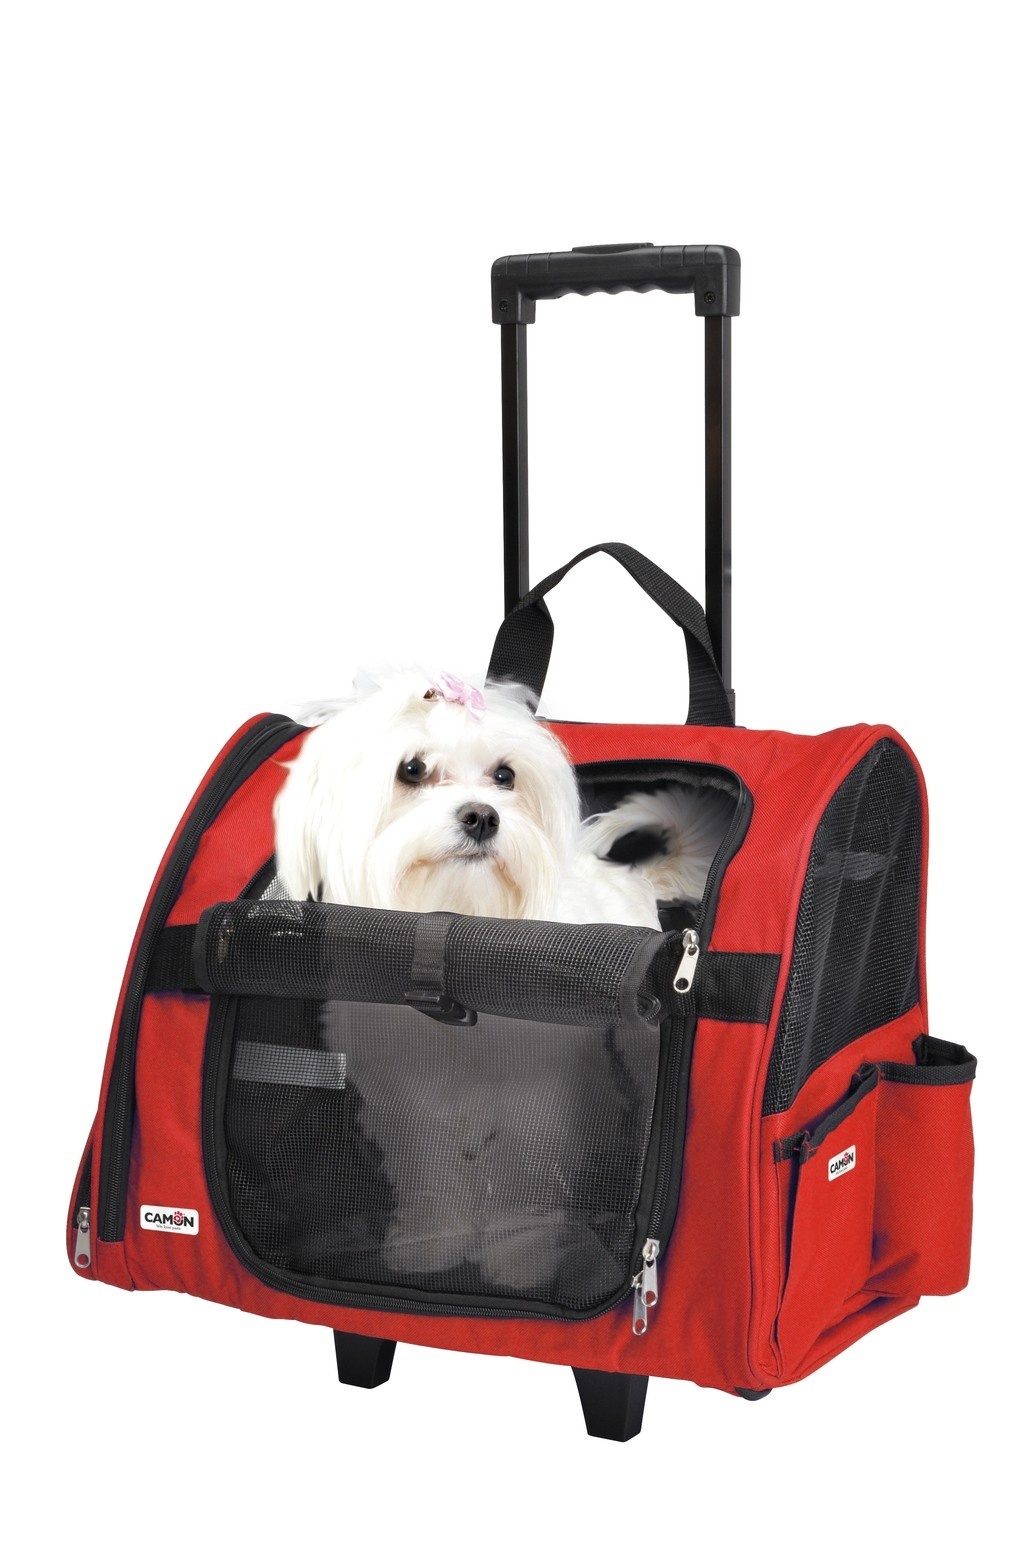 Camon Camon сумка-переноска Max для животных на колесах красная (43*26*36) цена и фото